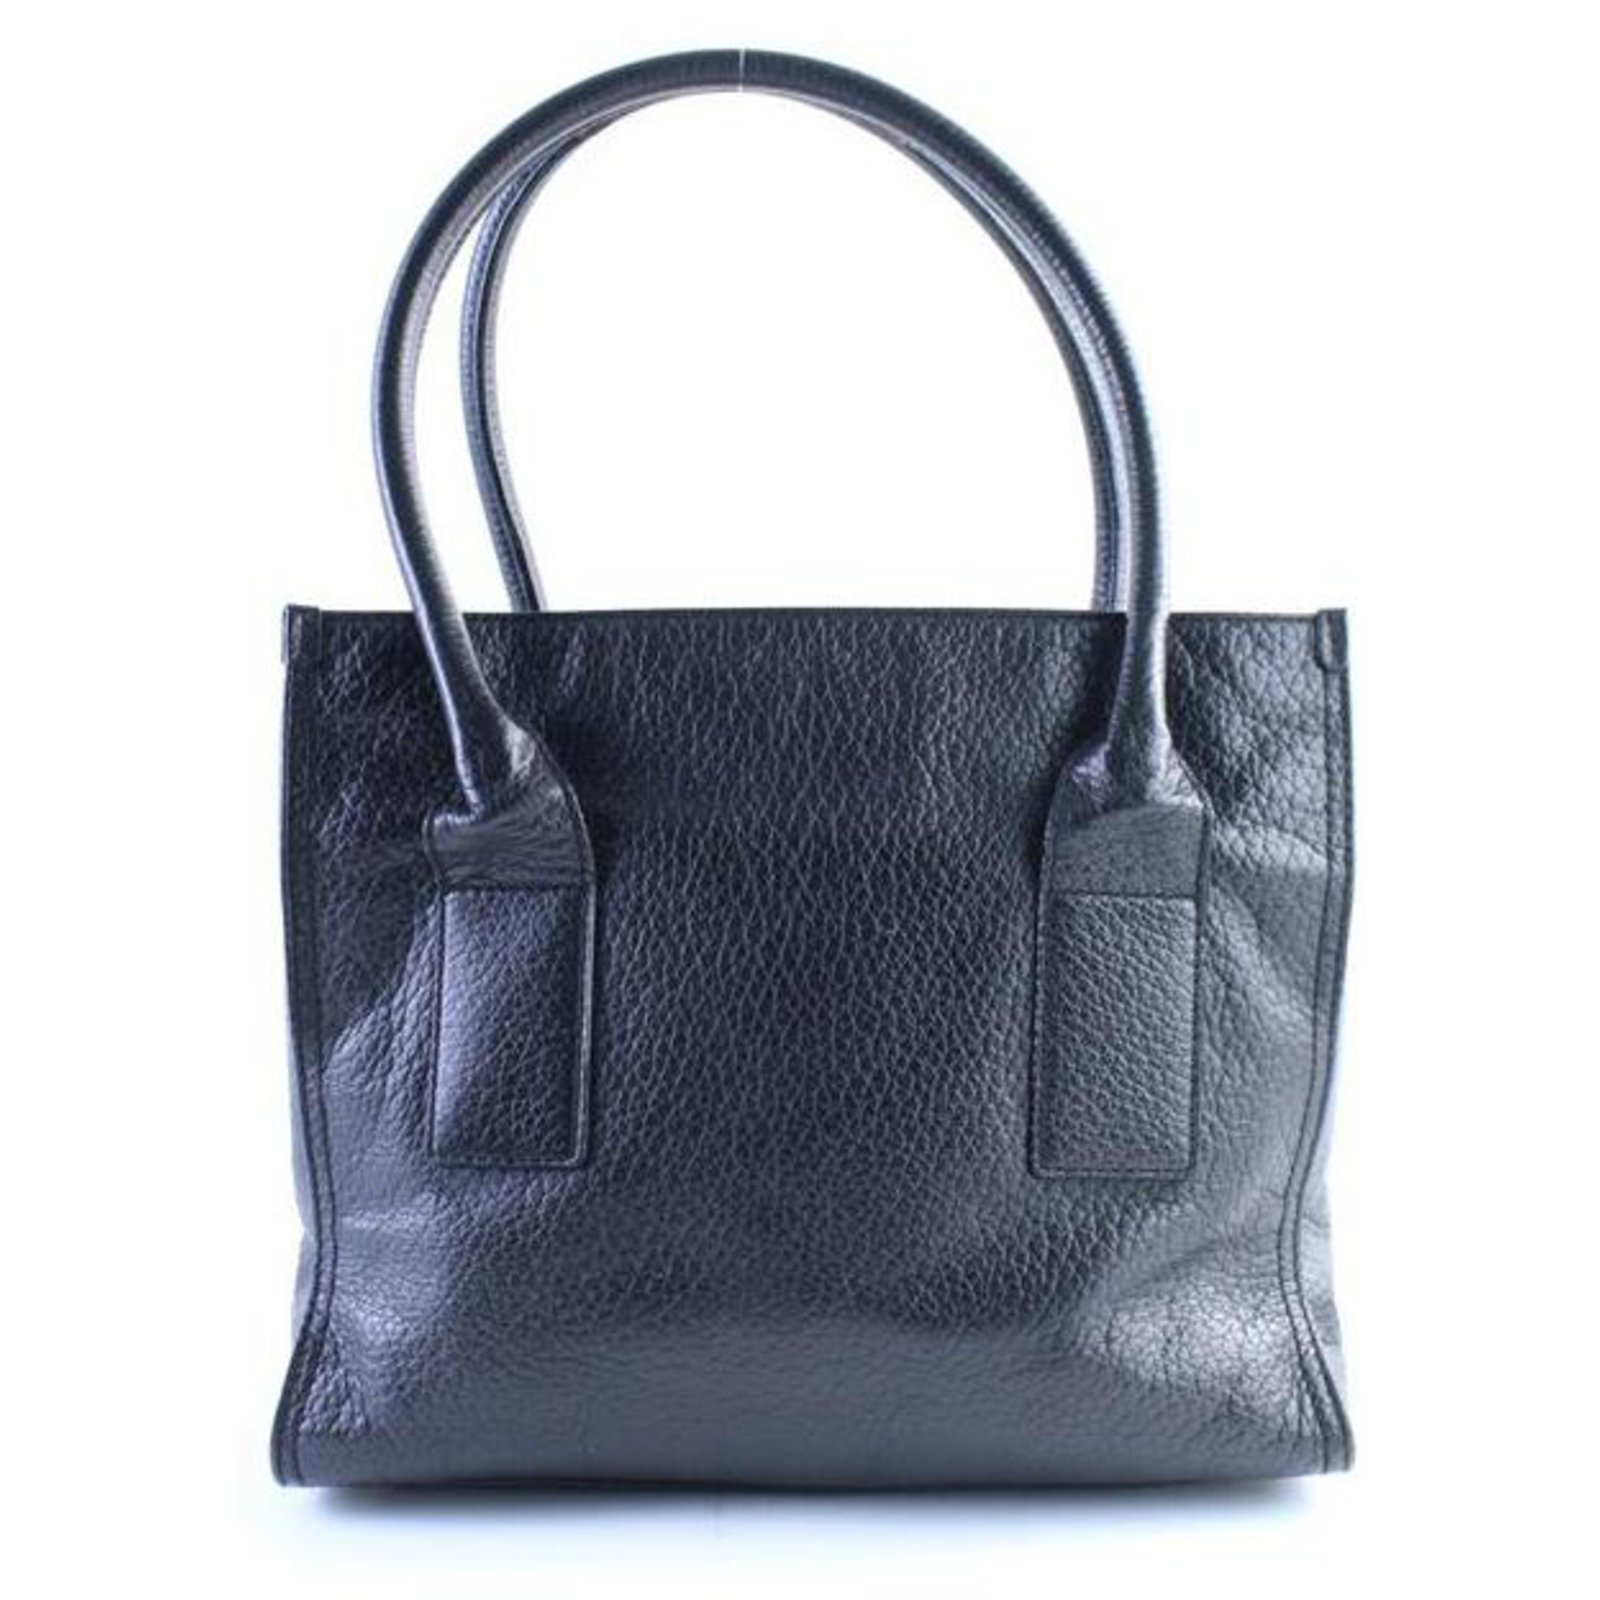 Kate Spade Black Patent Leather Tote Bag 245kp56